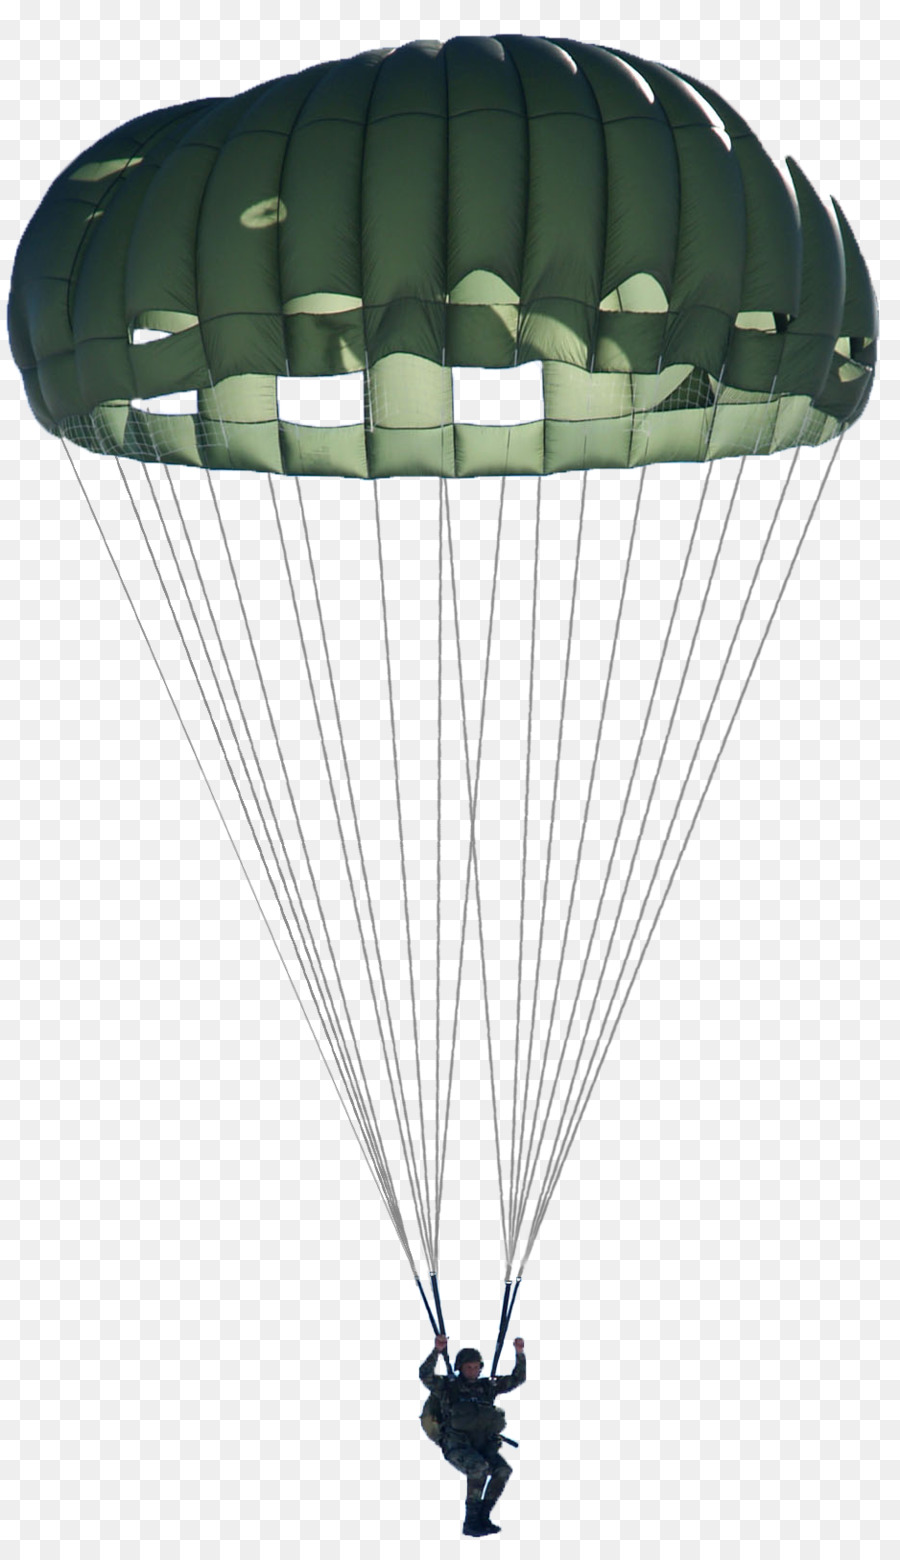 Parachute Parachuting Paratrooper Military - parachute png download - 938*1622 - Free Transparent Parachute png Download.